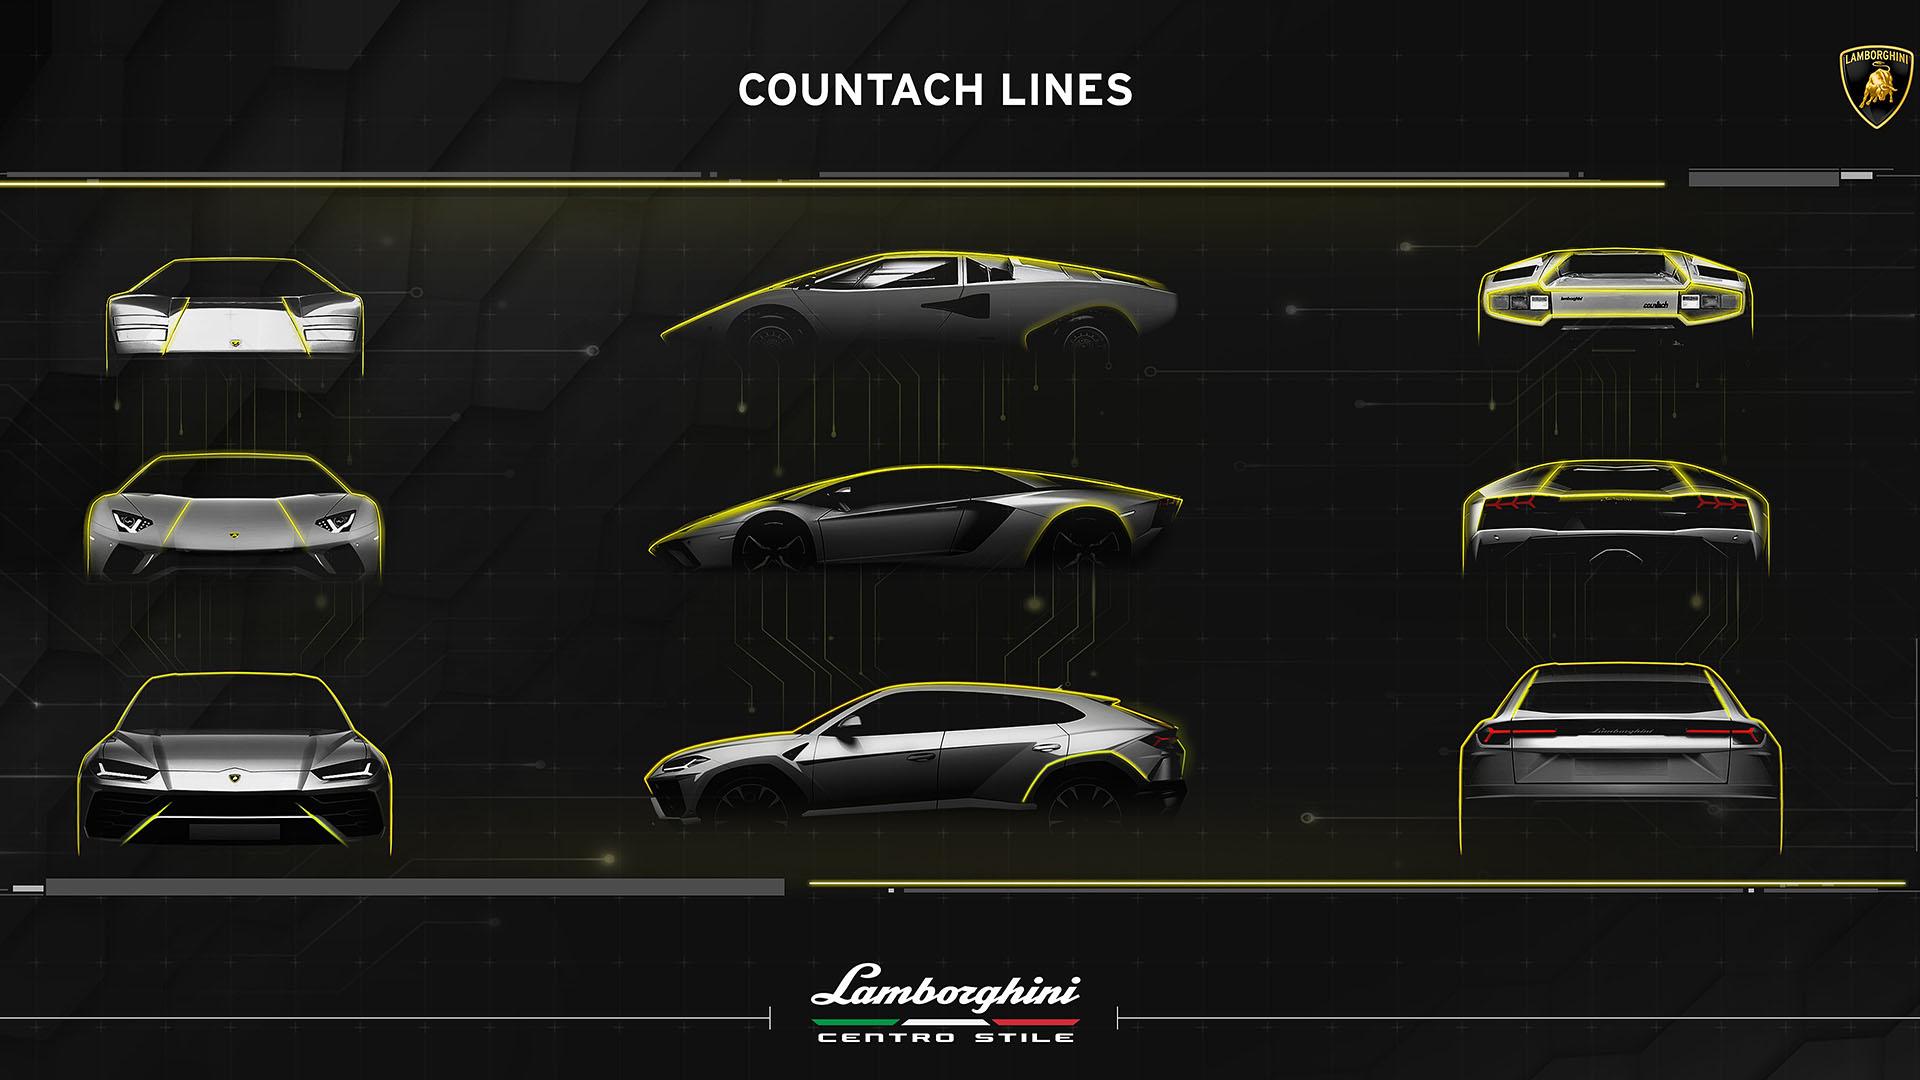 Lamborghini dna countach 7